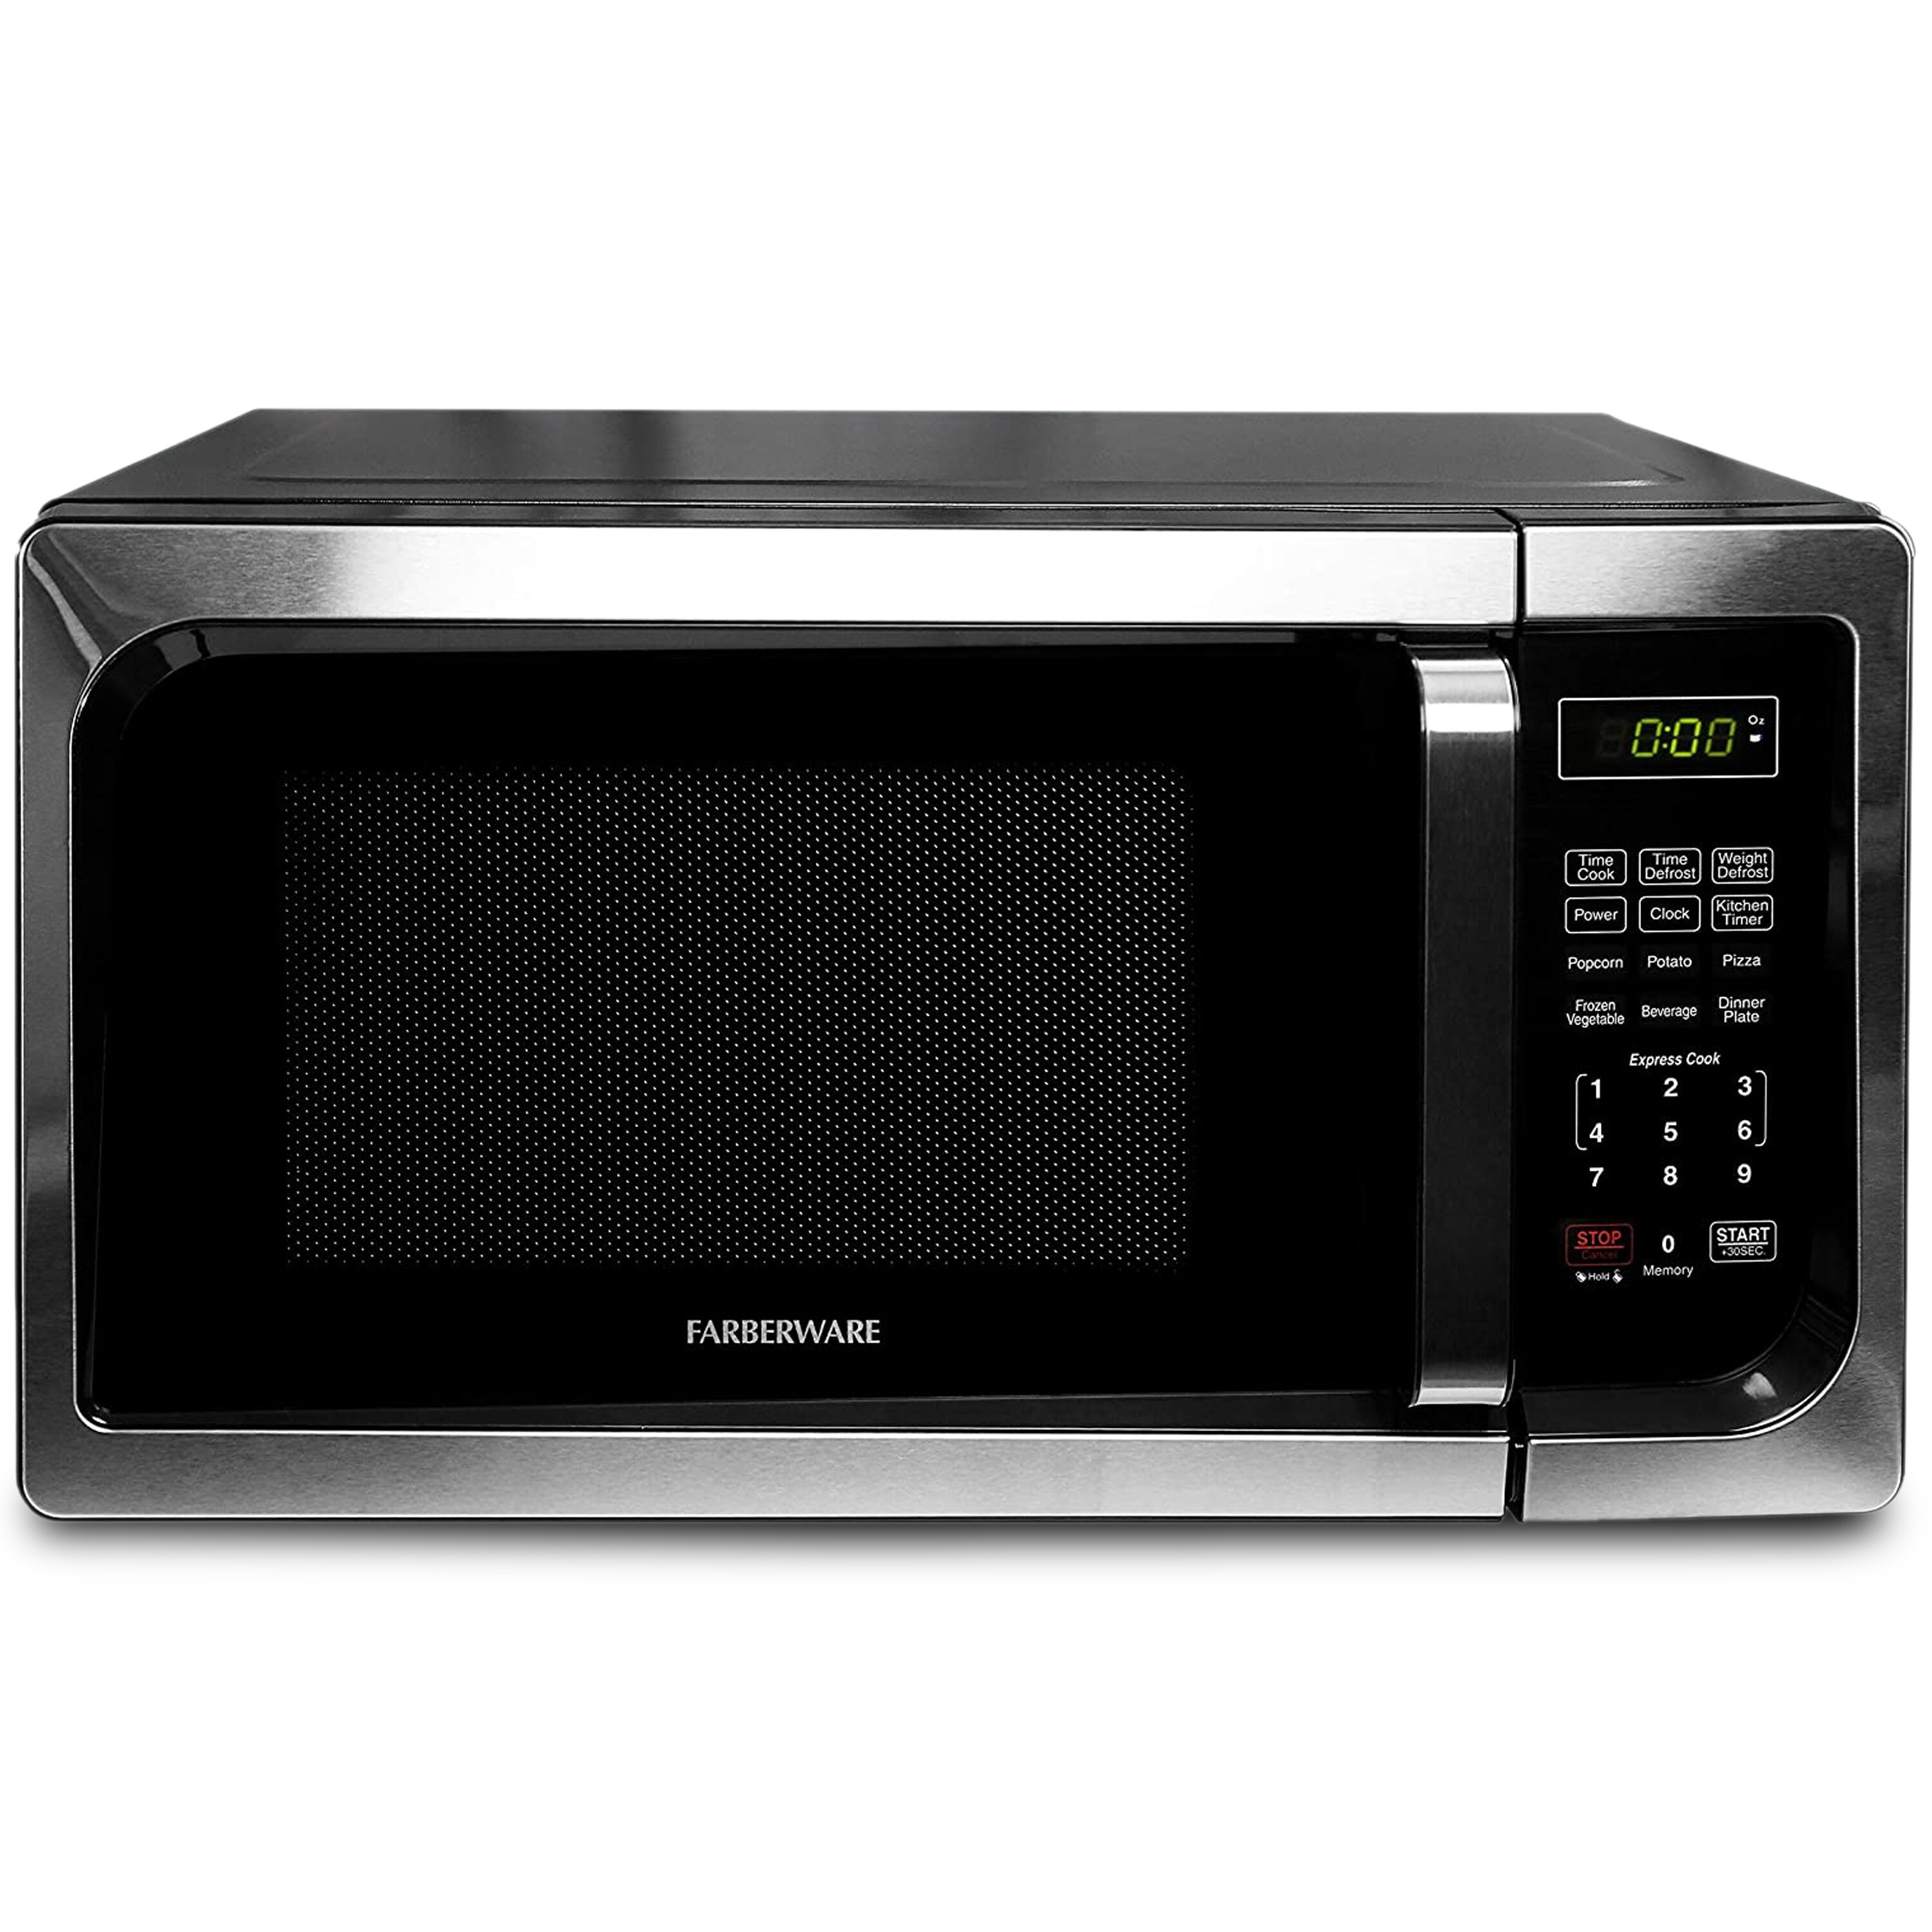 Magic Chef 0.9 cu. ft. 900-Watt Countertop Microwave in Stainless